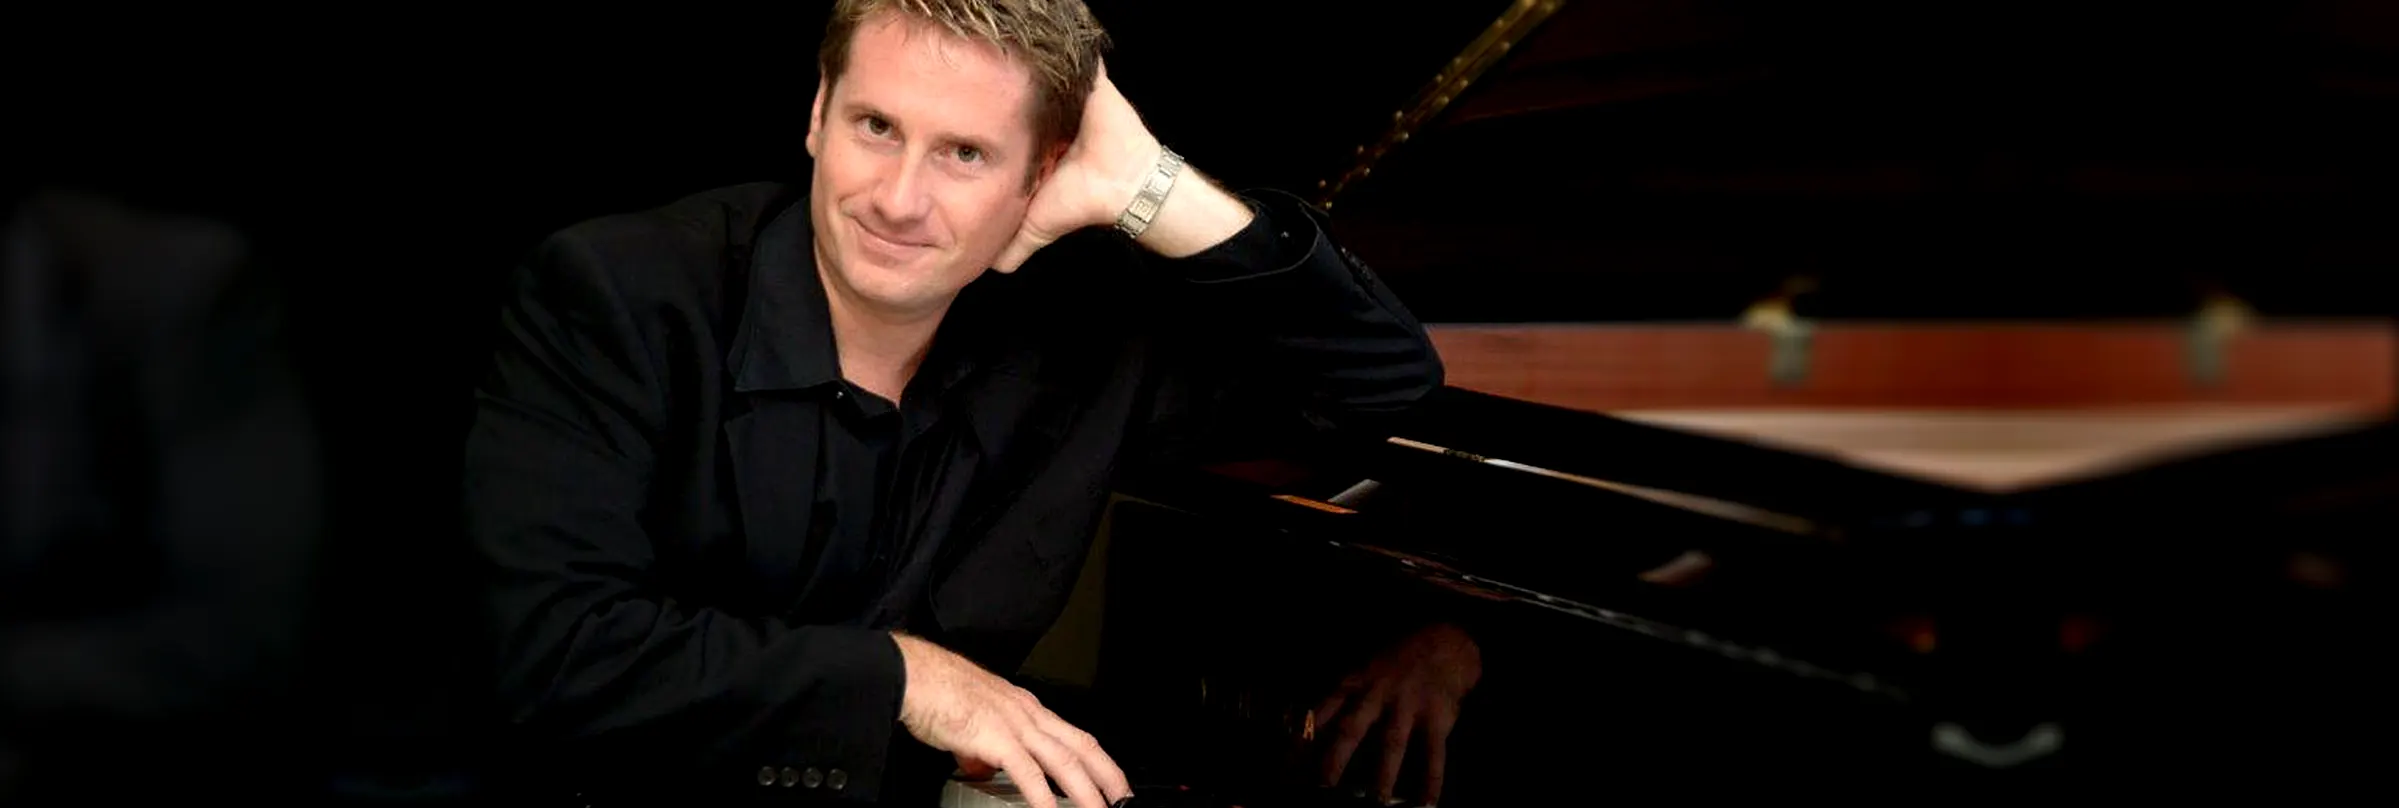 George Davidson Professional Concert Pianist